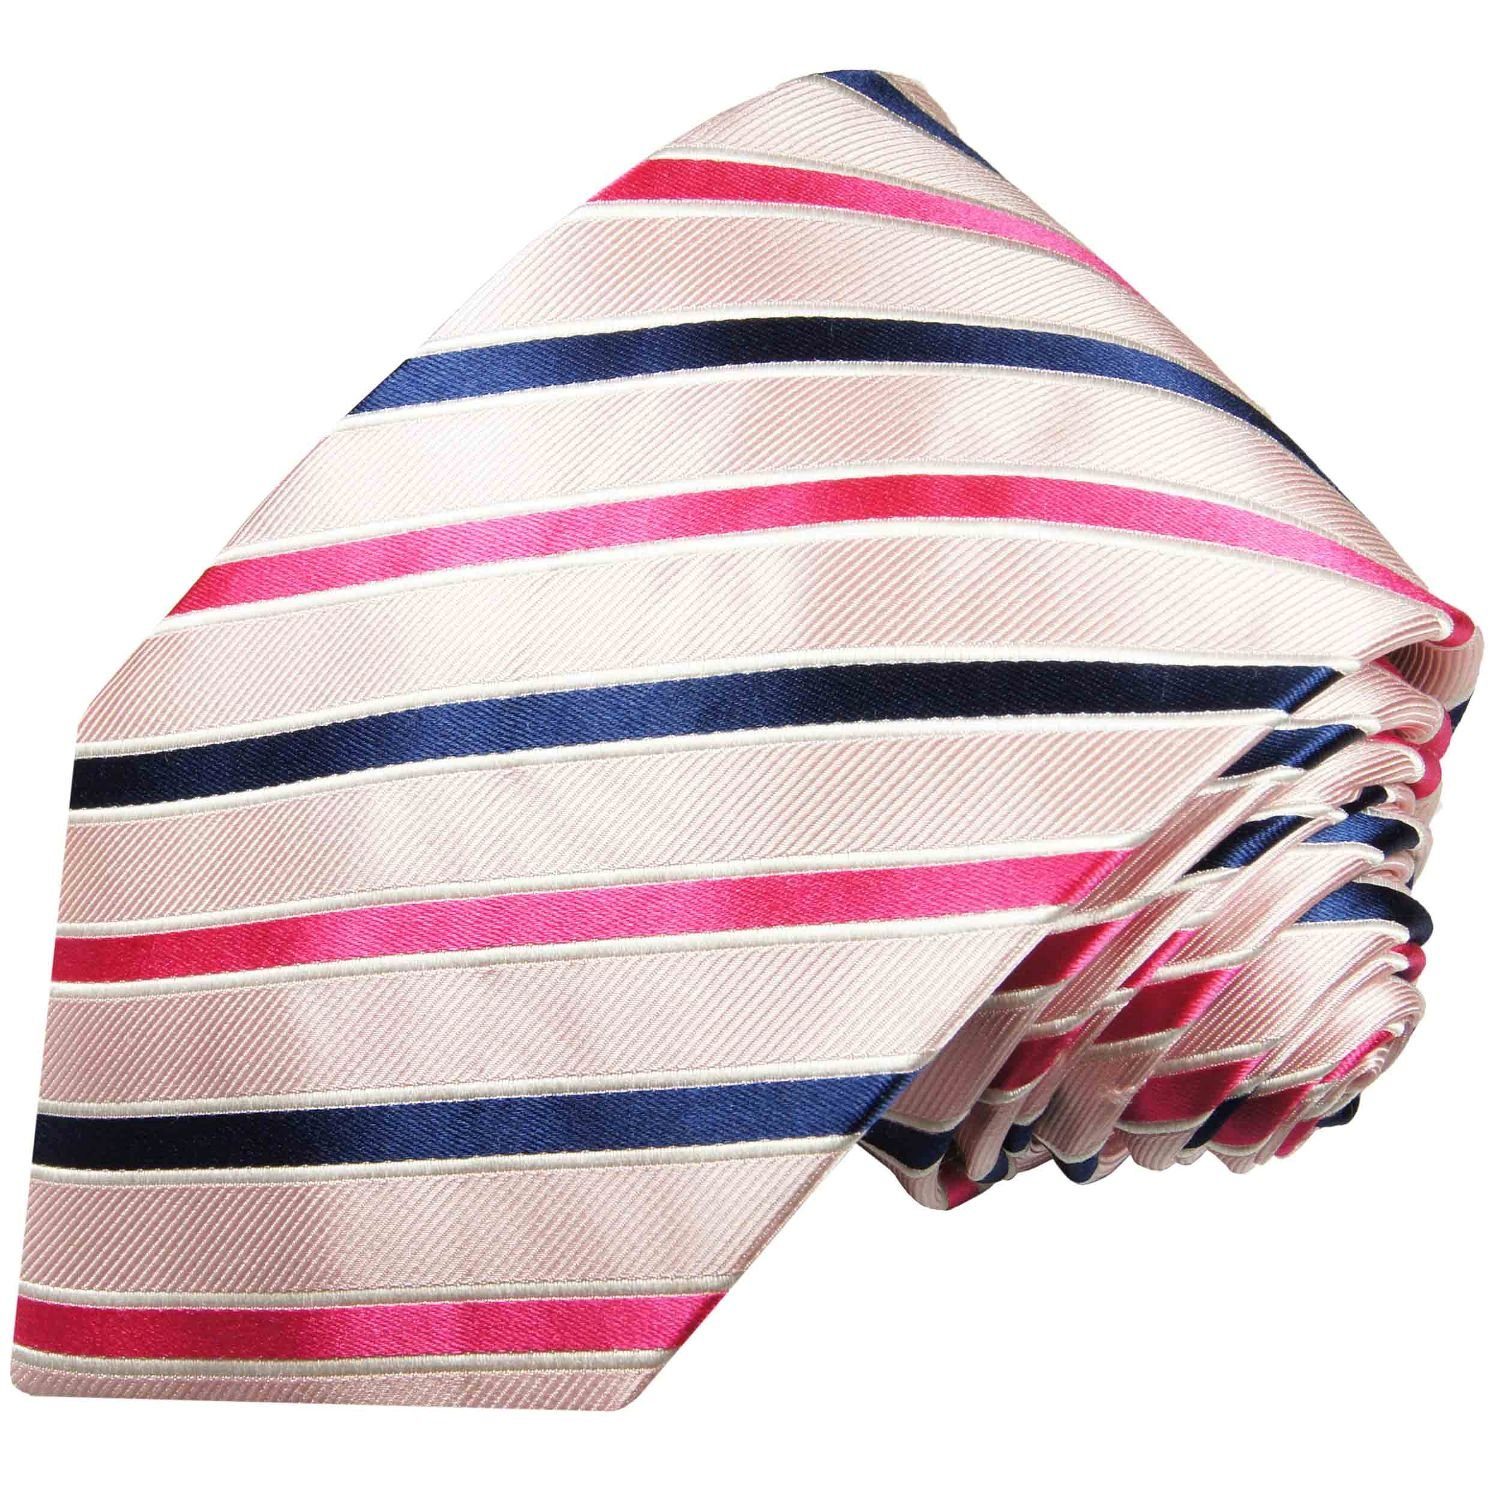 Schmal Herren 600 100% rosa Schlips Seide Paul Designer Krawatte Seidenkrawatte modern Malone (6cm), gestreift pink blau